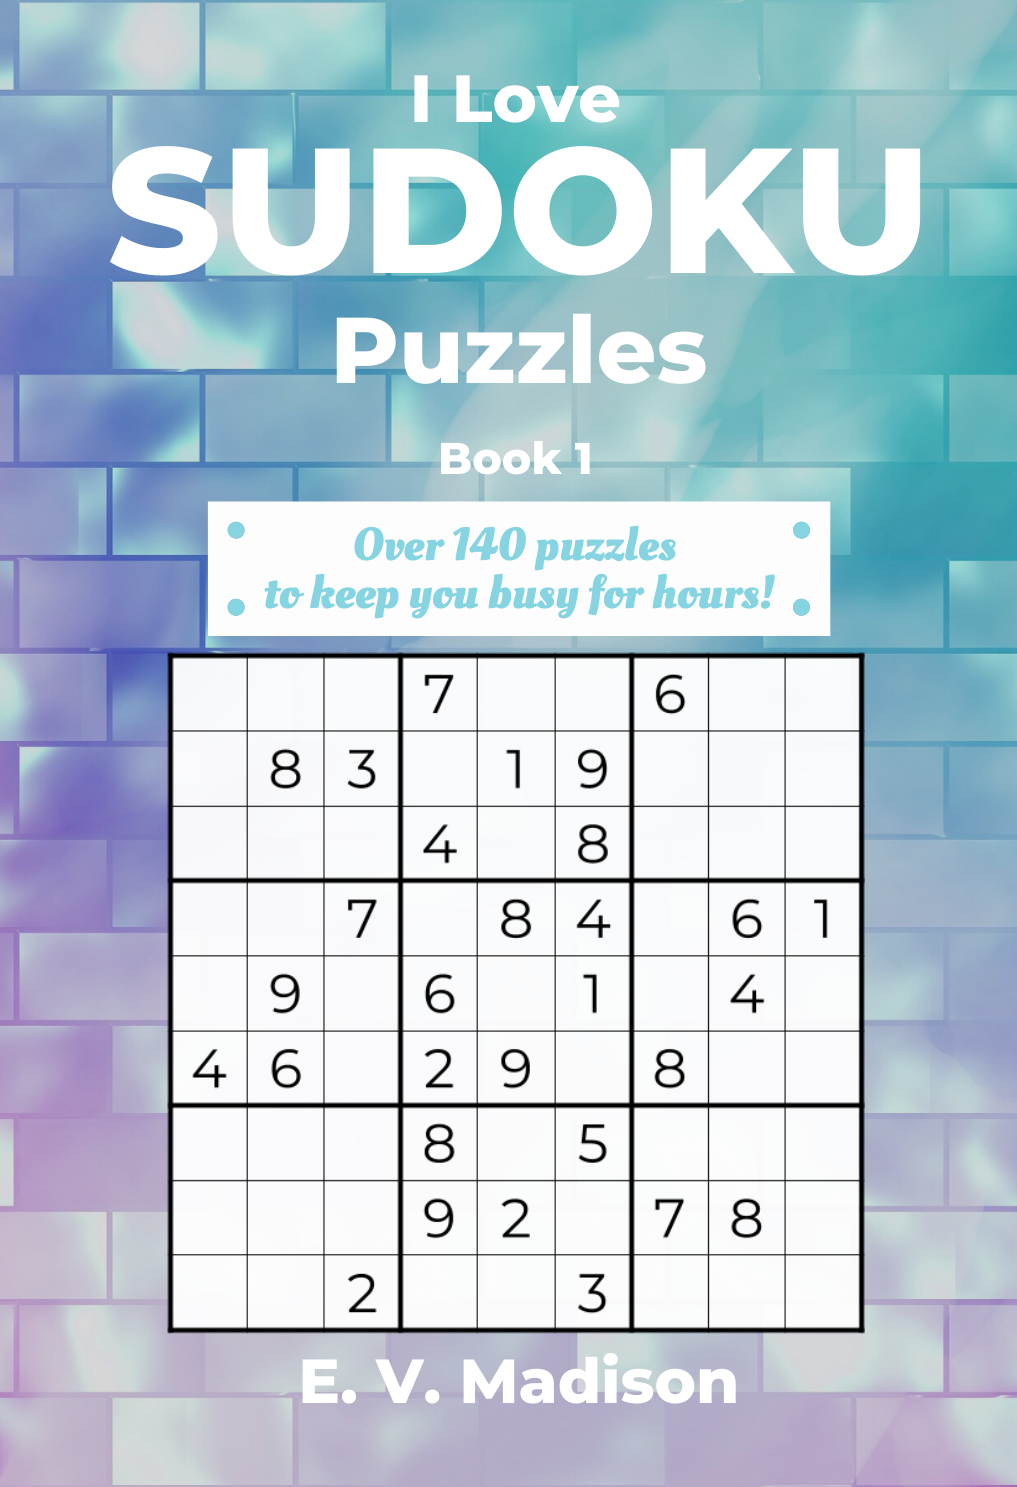 I Love Sudoku Puzzles - Book 1